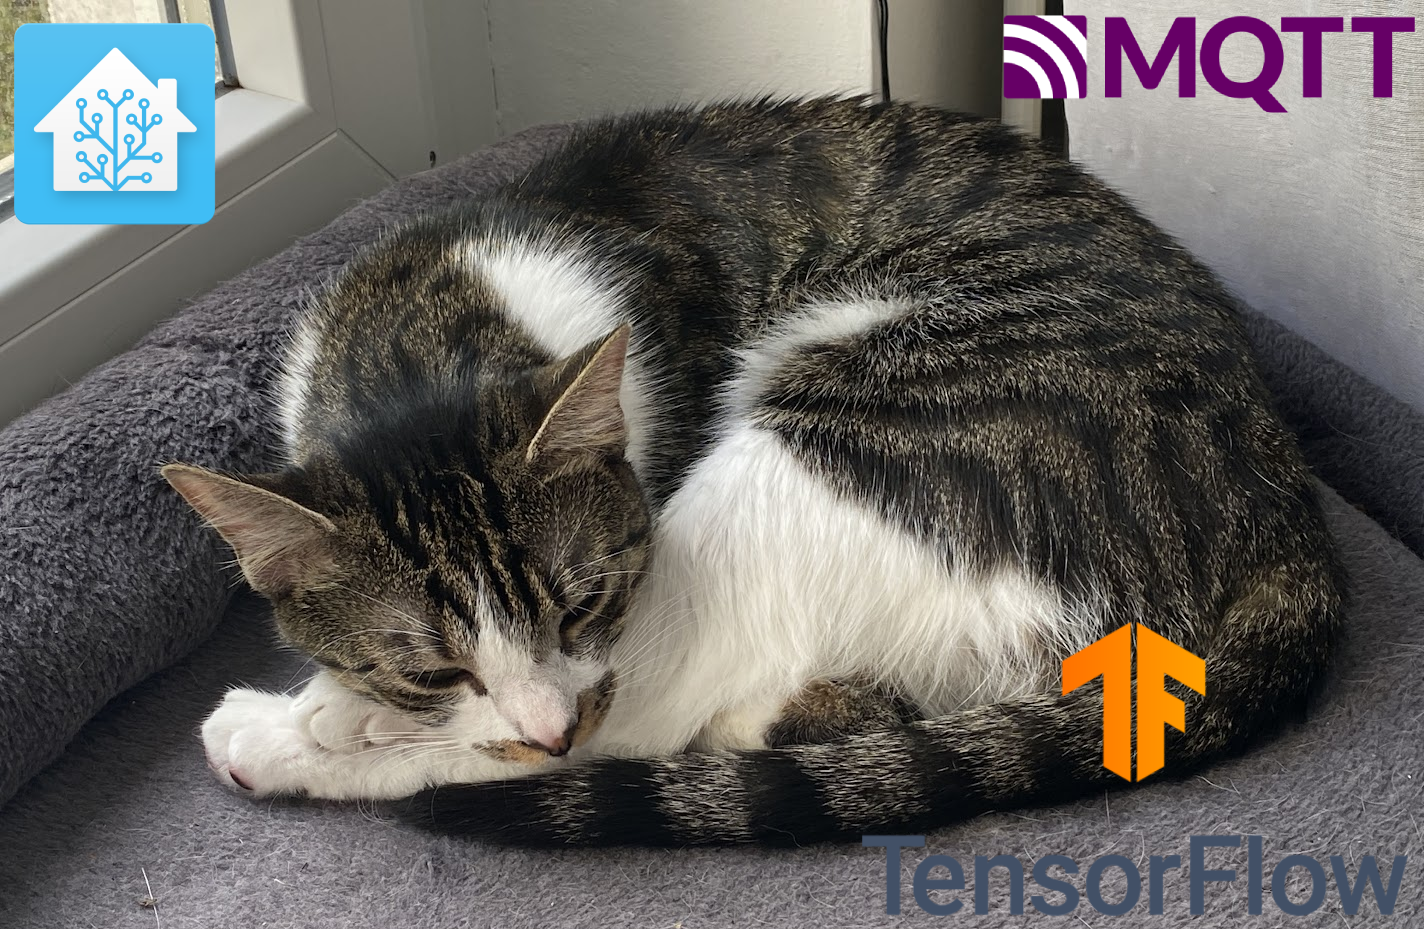 cat2mqtt: Quick beginner-friendly custom object detection with TensorFlow/Keras